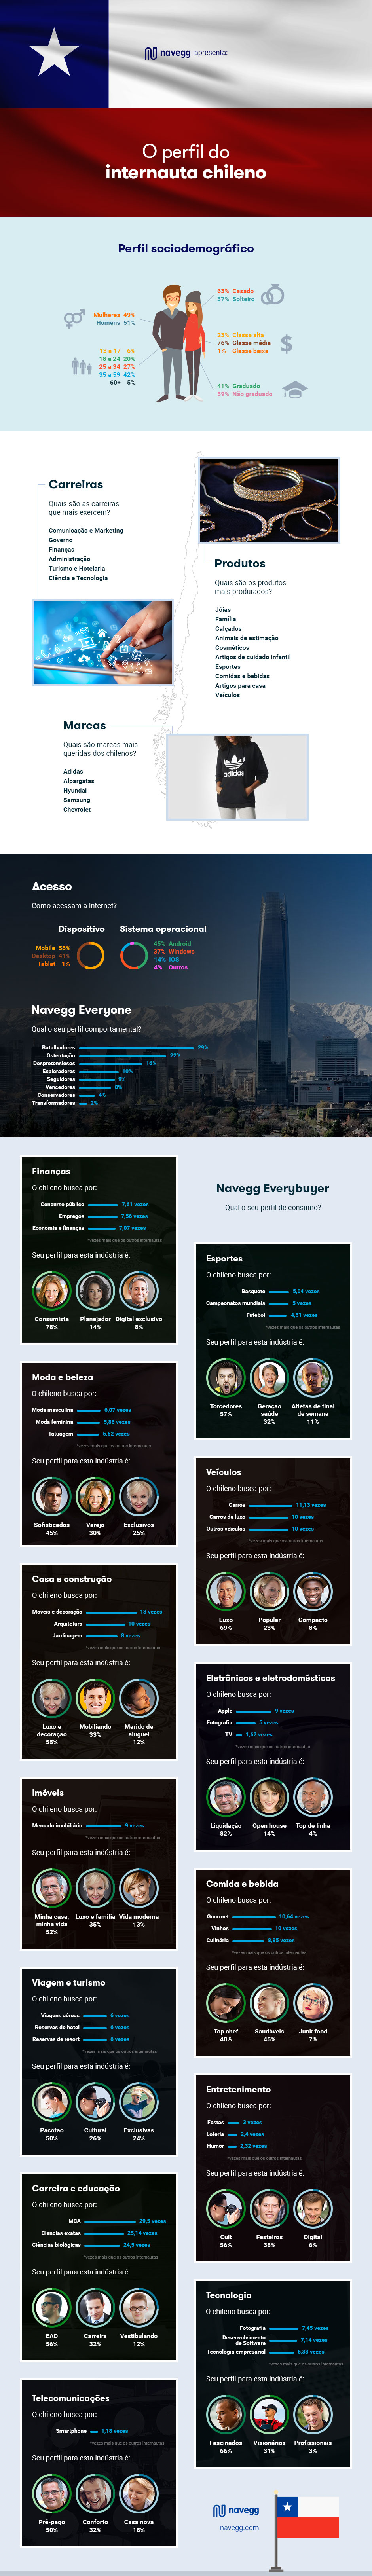 navegg-infografico-perfil-do-internauta-chileno